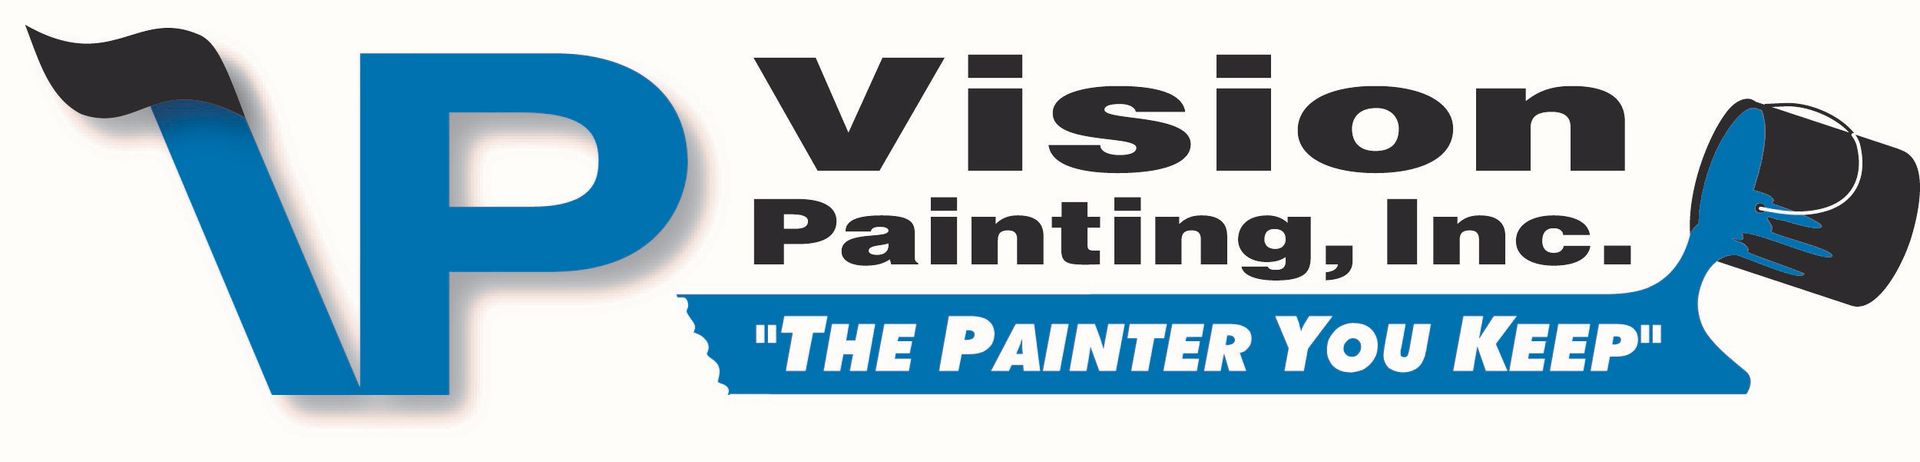 Vision Painting, Inc. - Logo